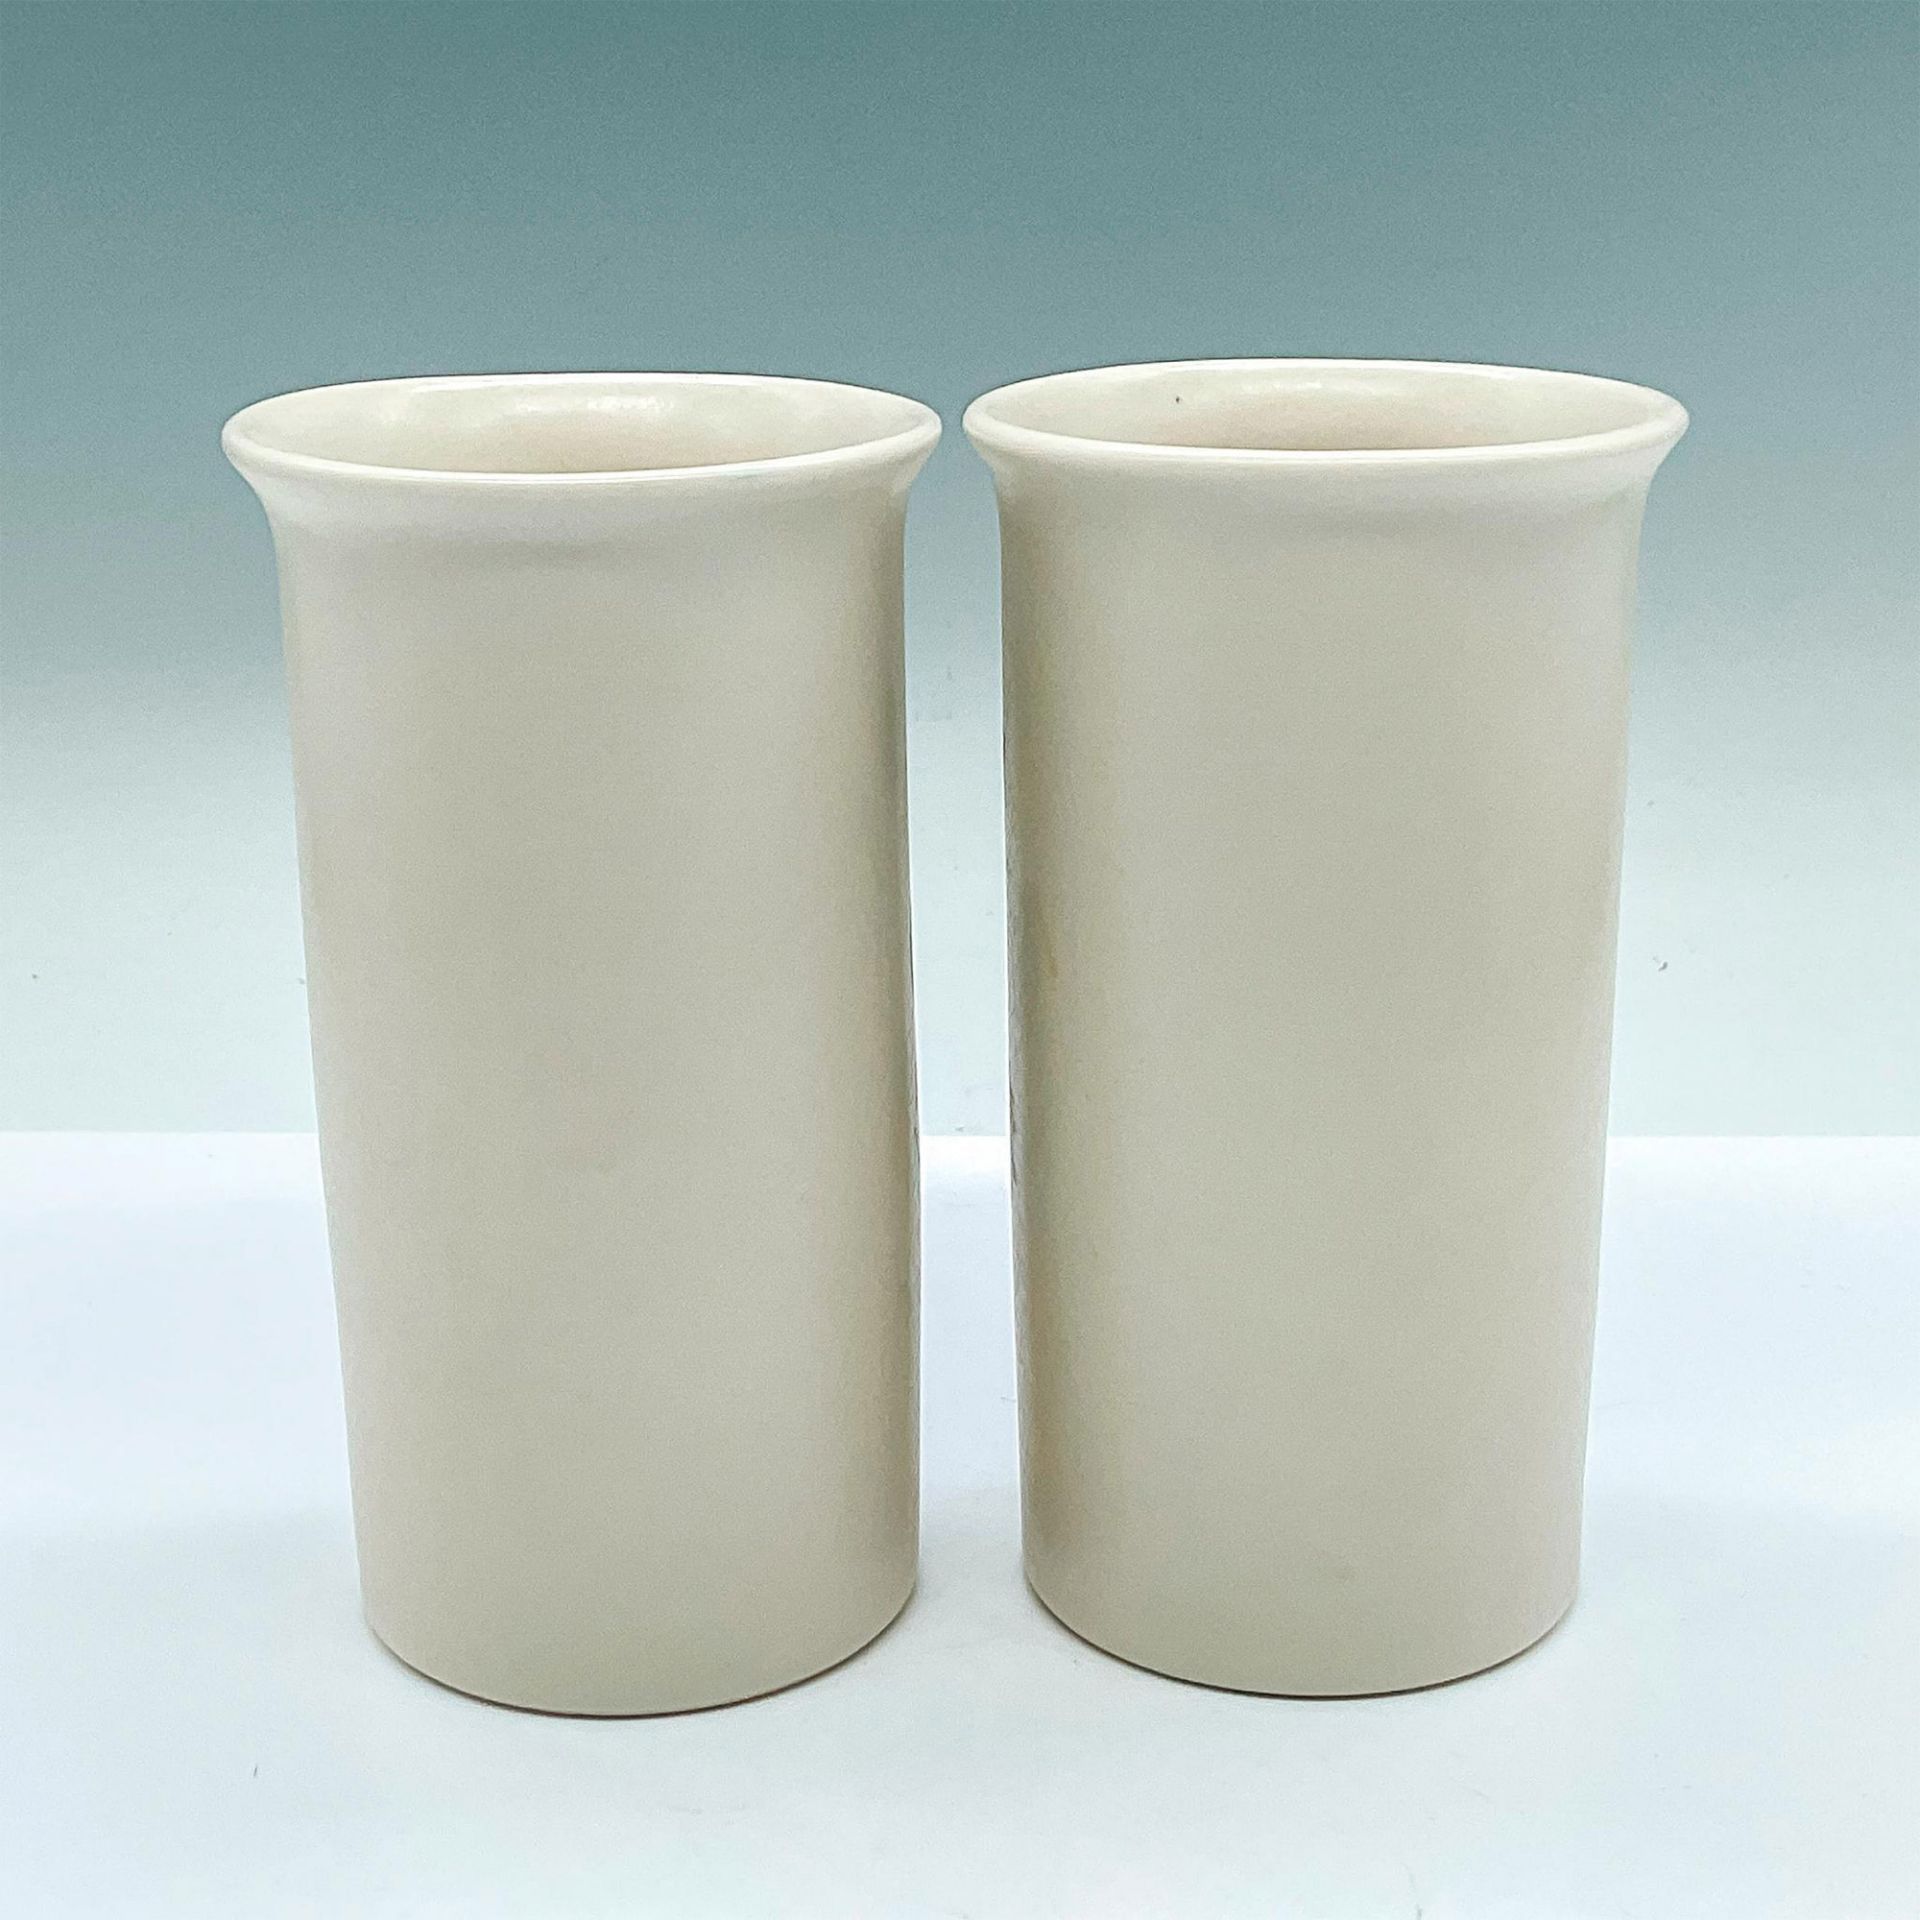 Pair of Arabia Finnish Ceramic Floral Vases by Esteri Tomula - Image 2 of 3